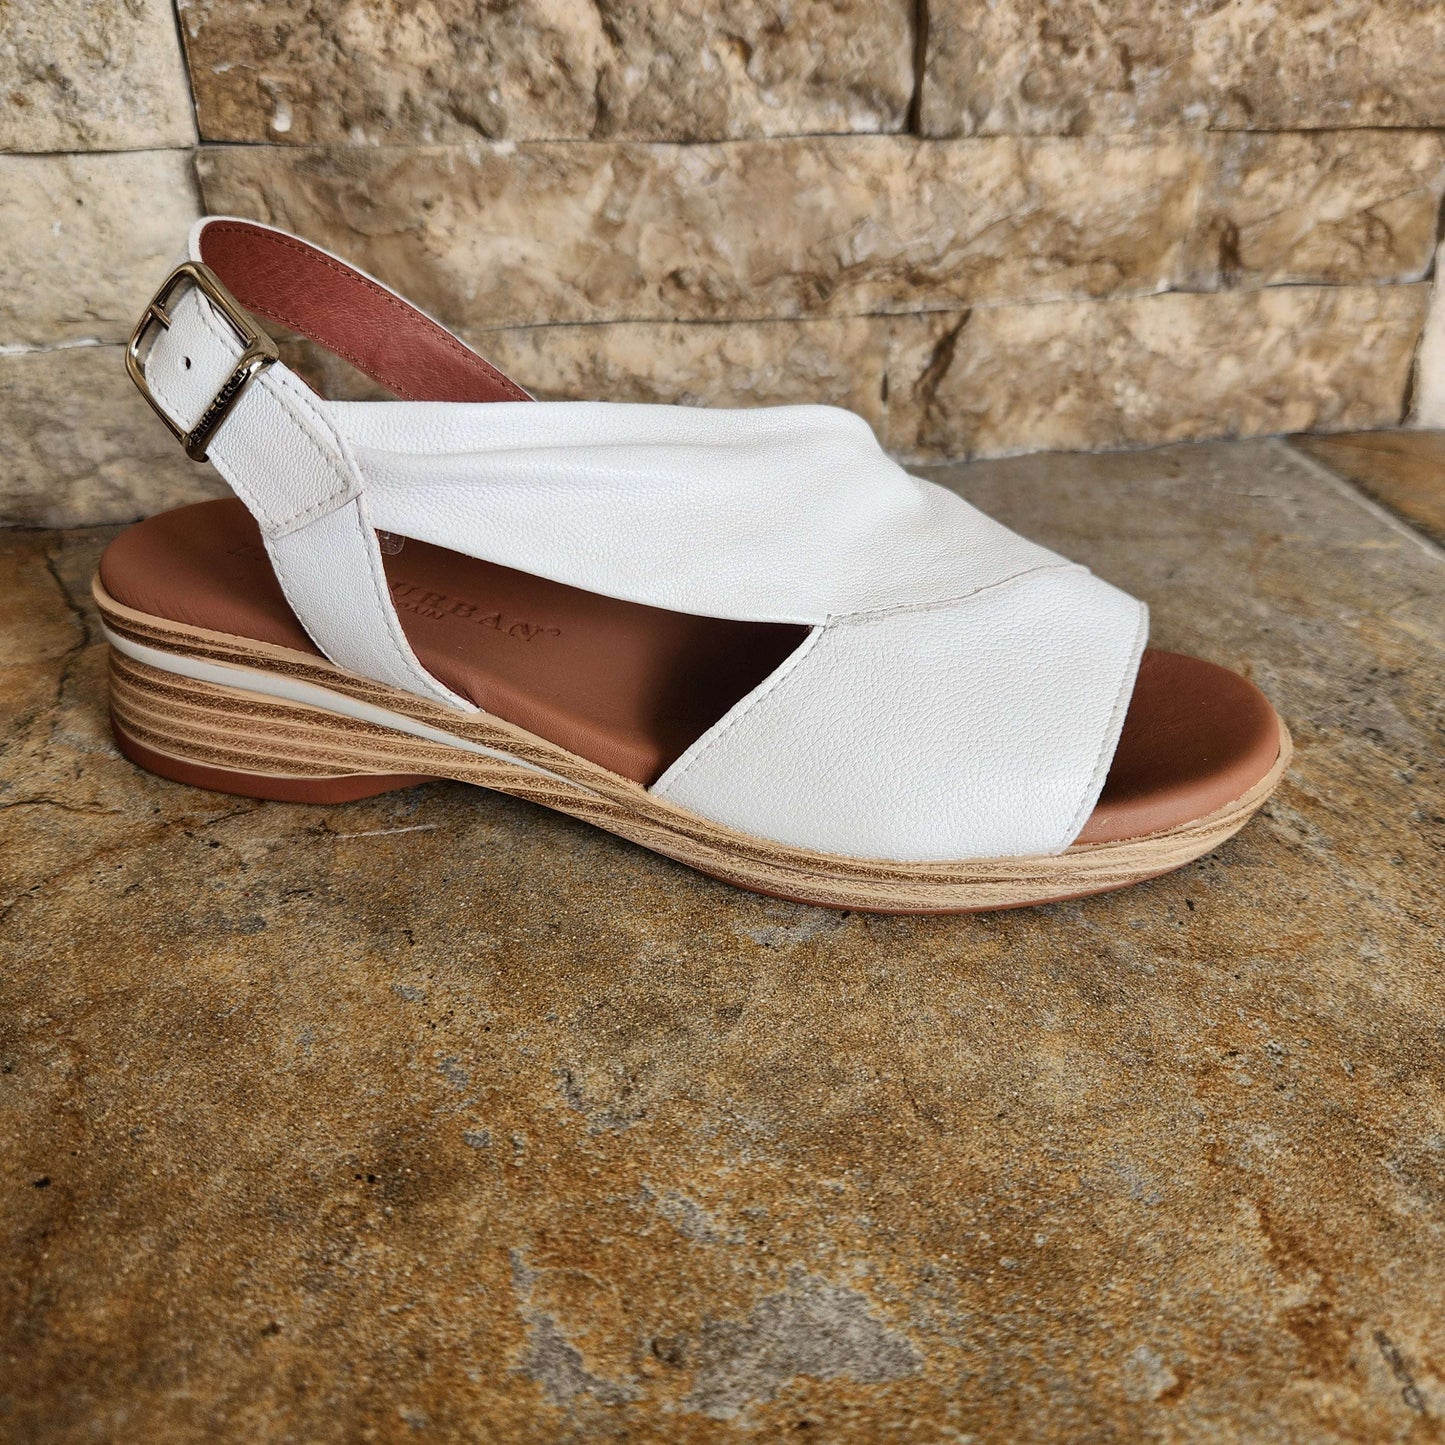 Paula Urban - Flat Leather Sandal, sandals, PAULA URBAN, Plum Bottom